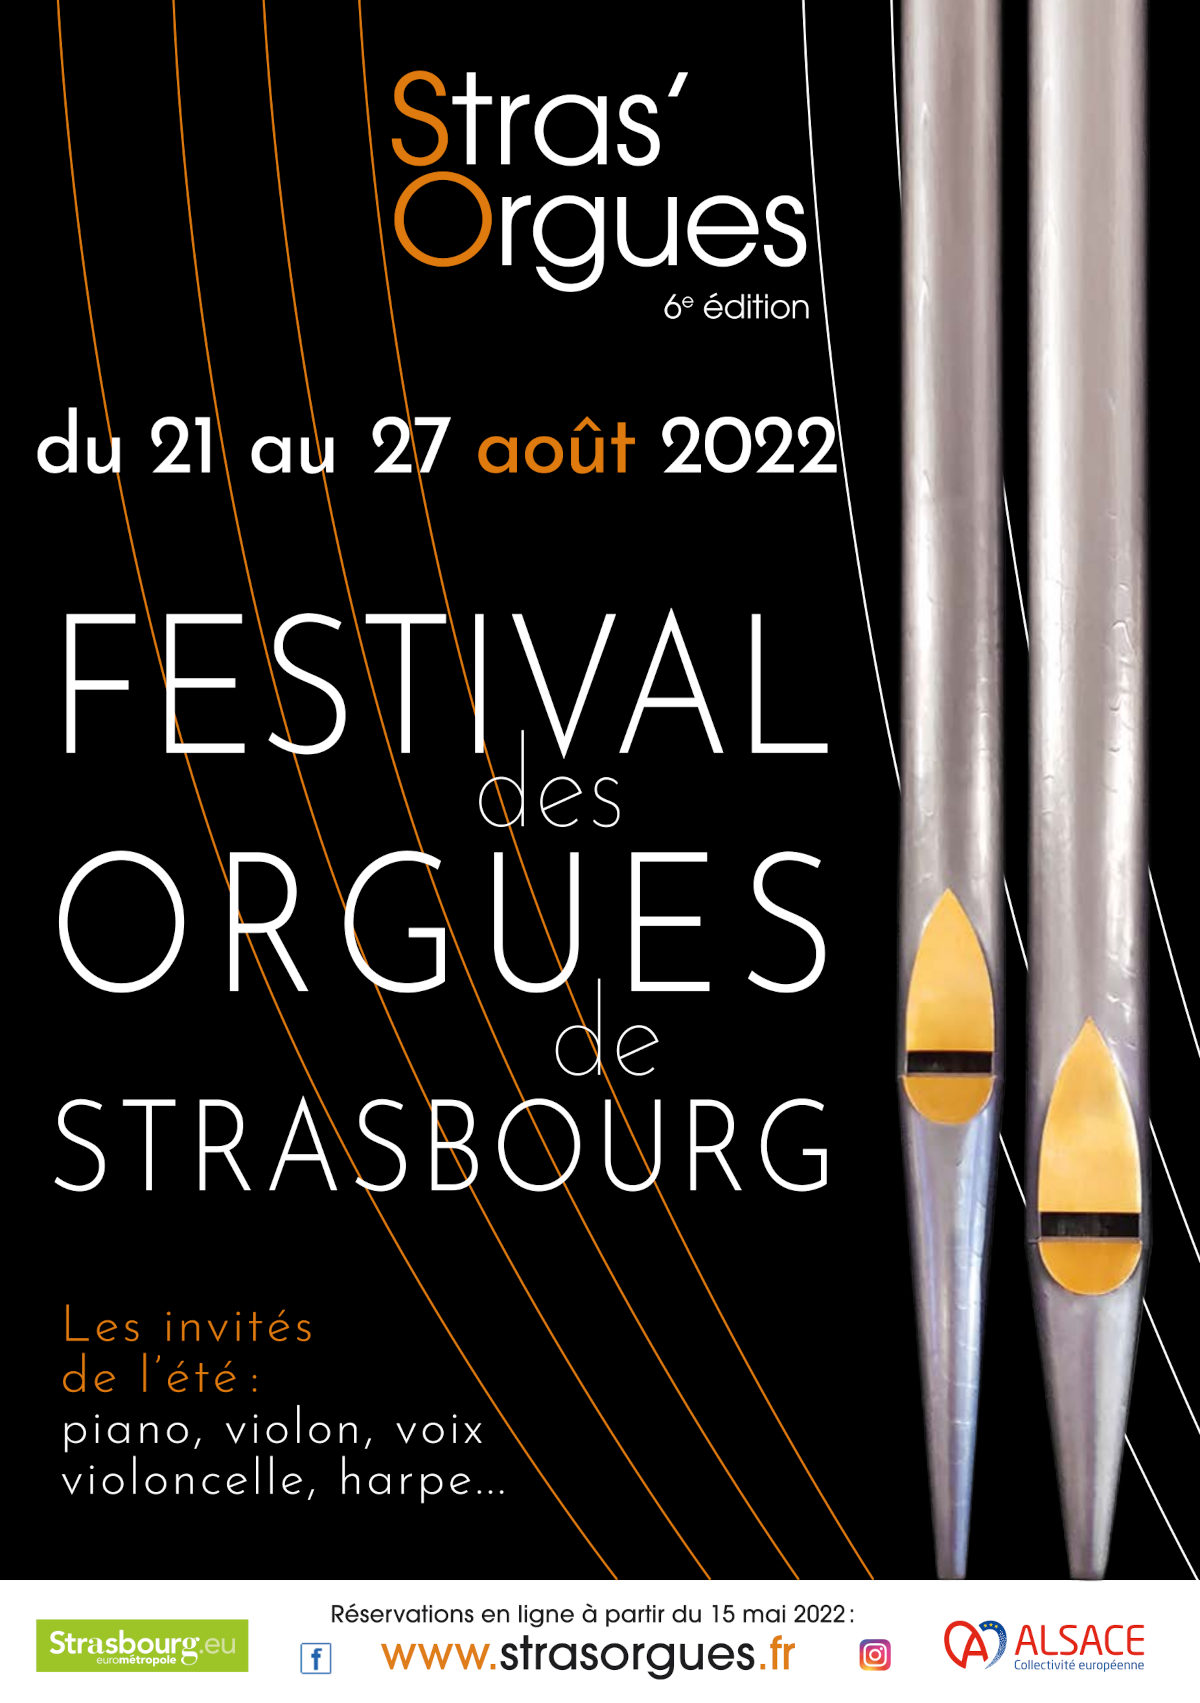 Stras'orgues : Festival des orgues de Strasbourg